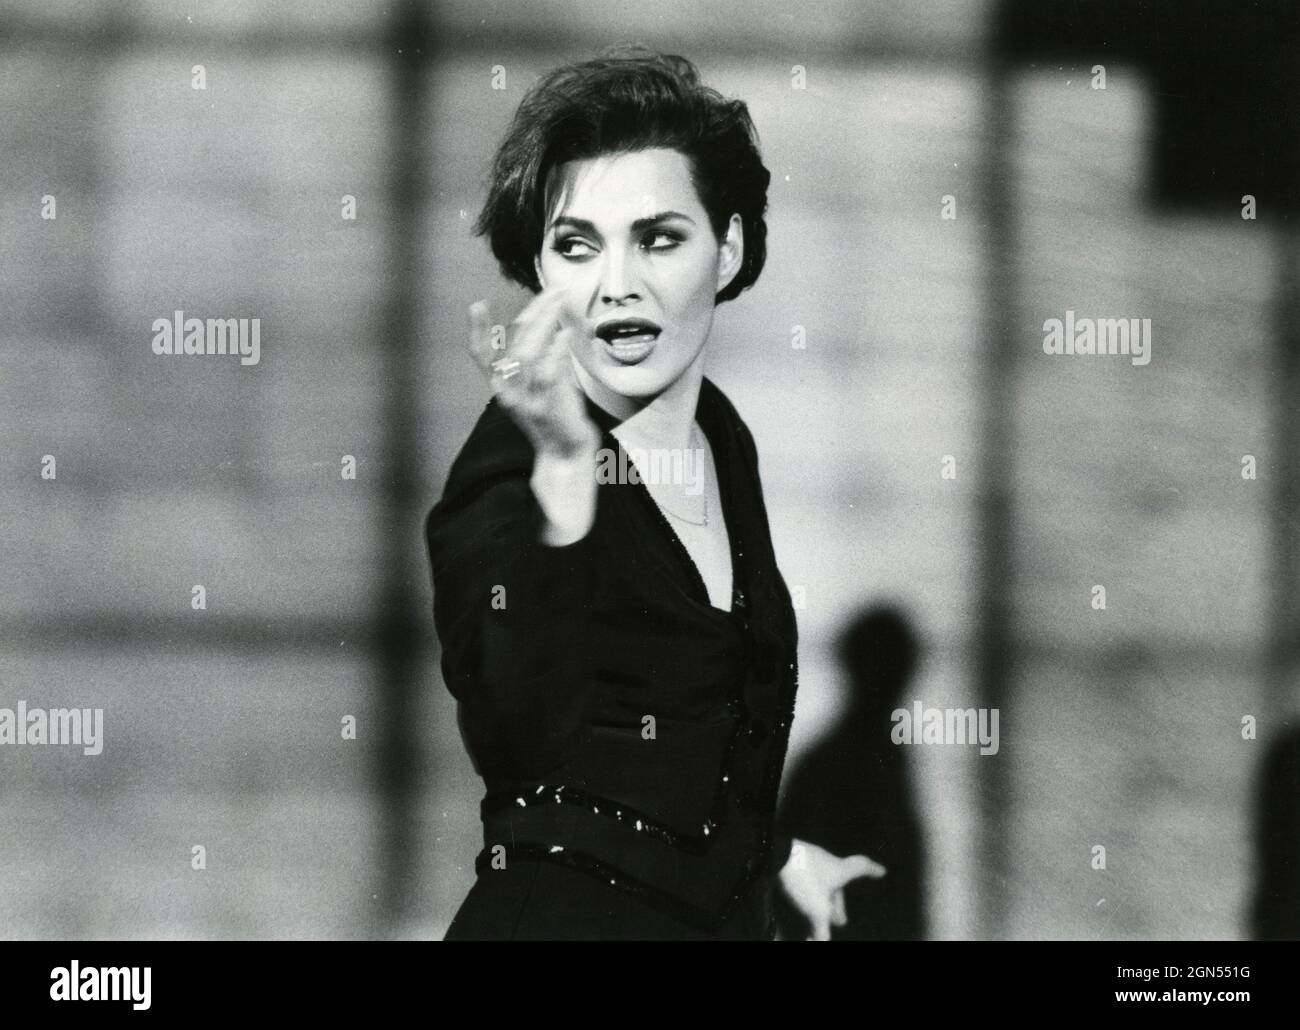 Italian singer Anna Oxa, 1980s Stock Photo